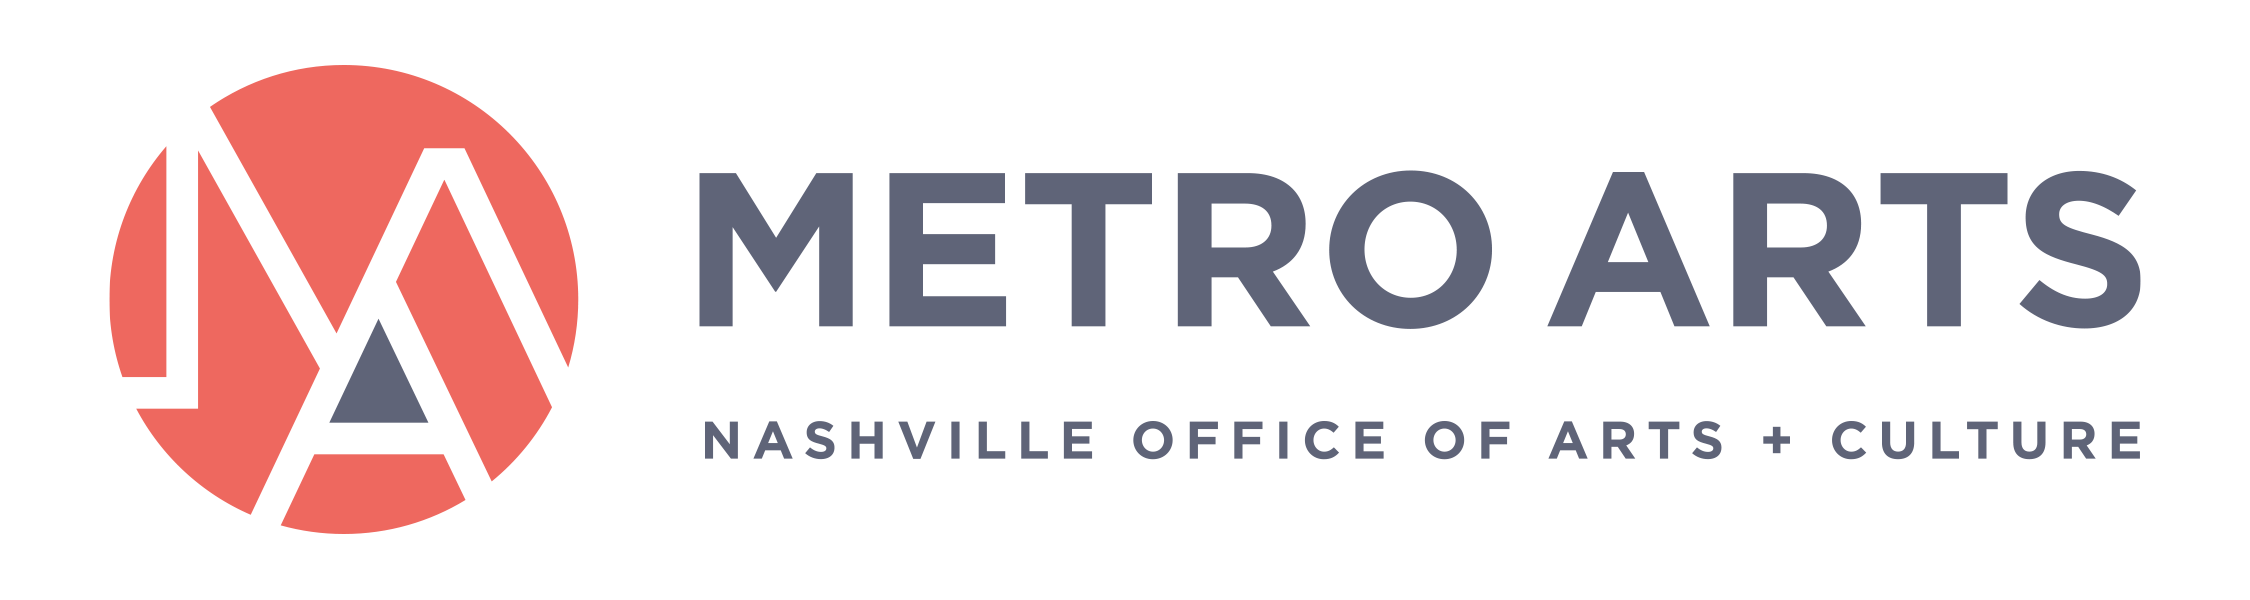 MetroArts-logo-horizontal-RGB.png